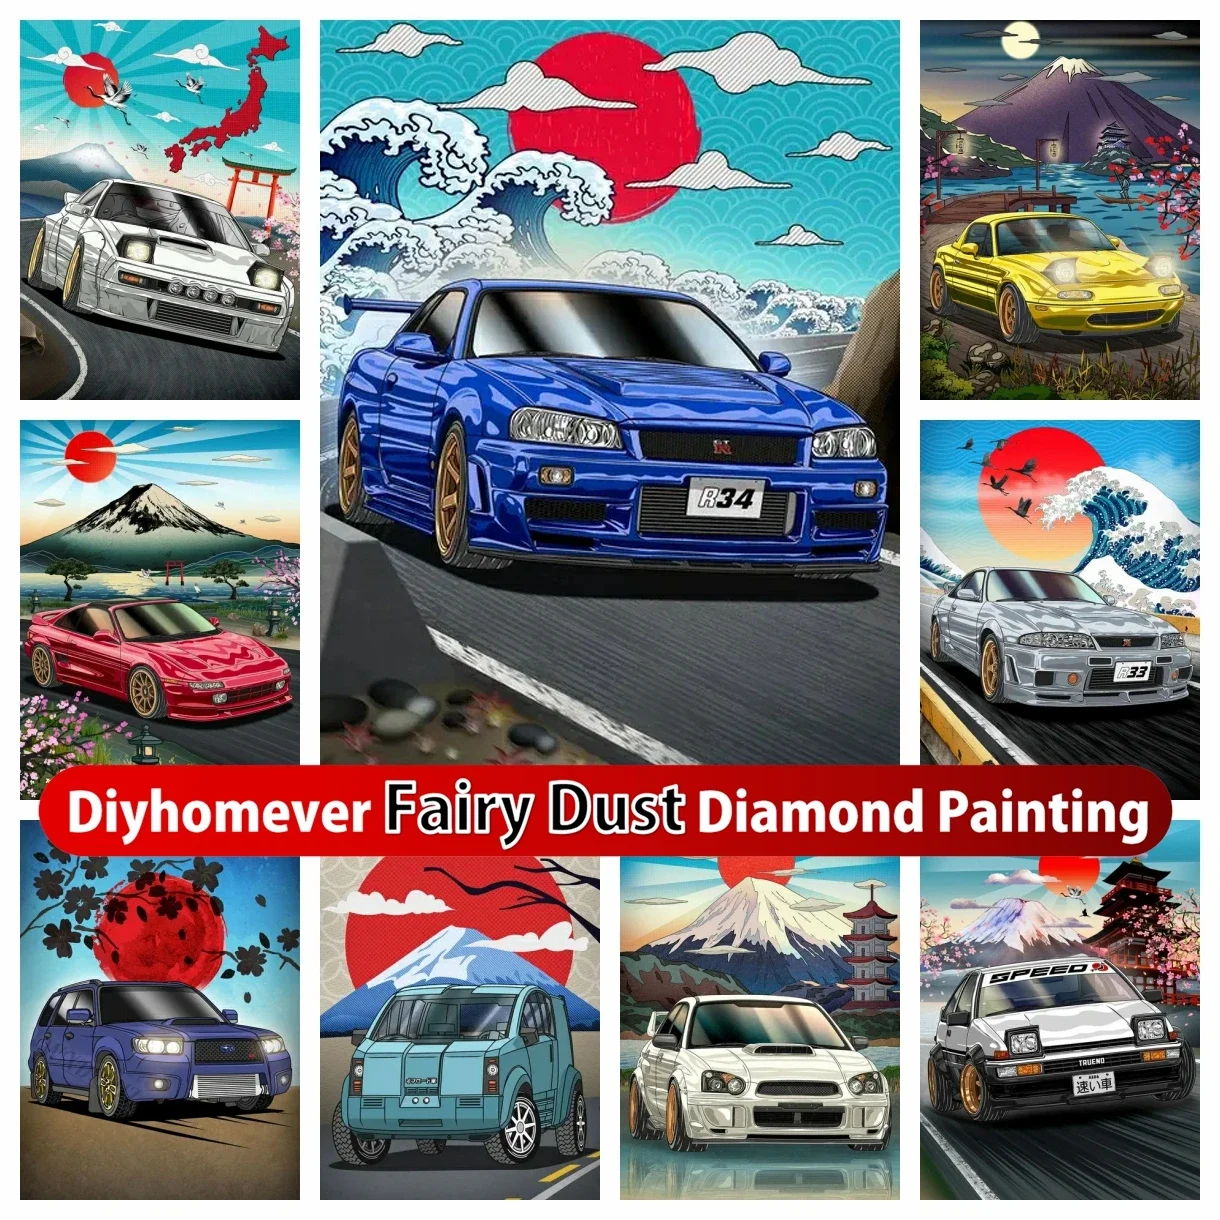 

GTR R33 R34 Jdm Cars Fairy Dust Diamond Painting Embroidery World Famous Sports Cross Stitch Mosaic Rhinestones Home Decor Gift